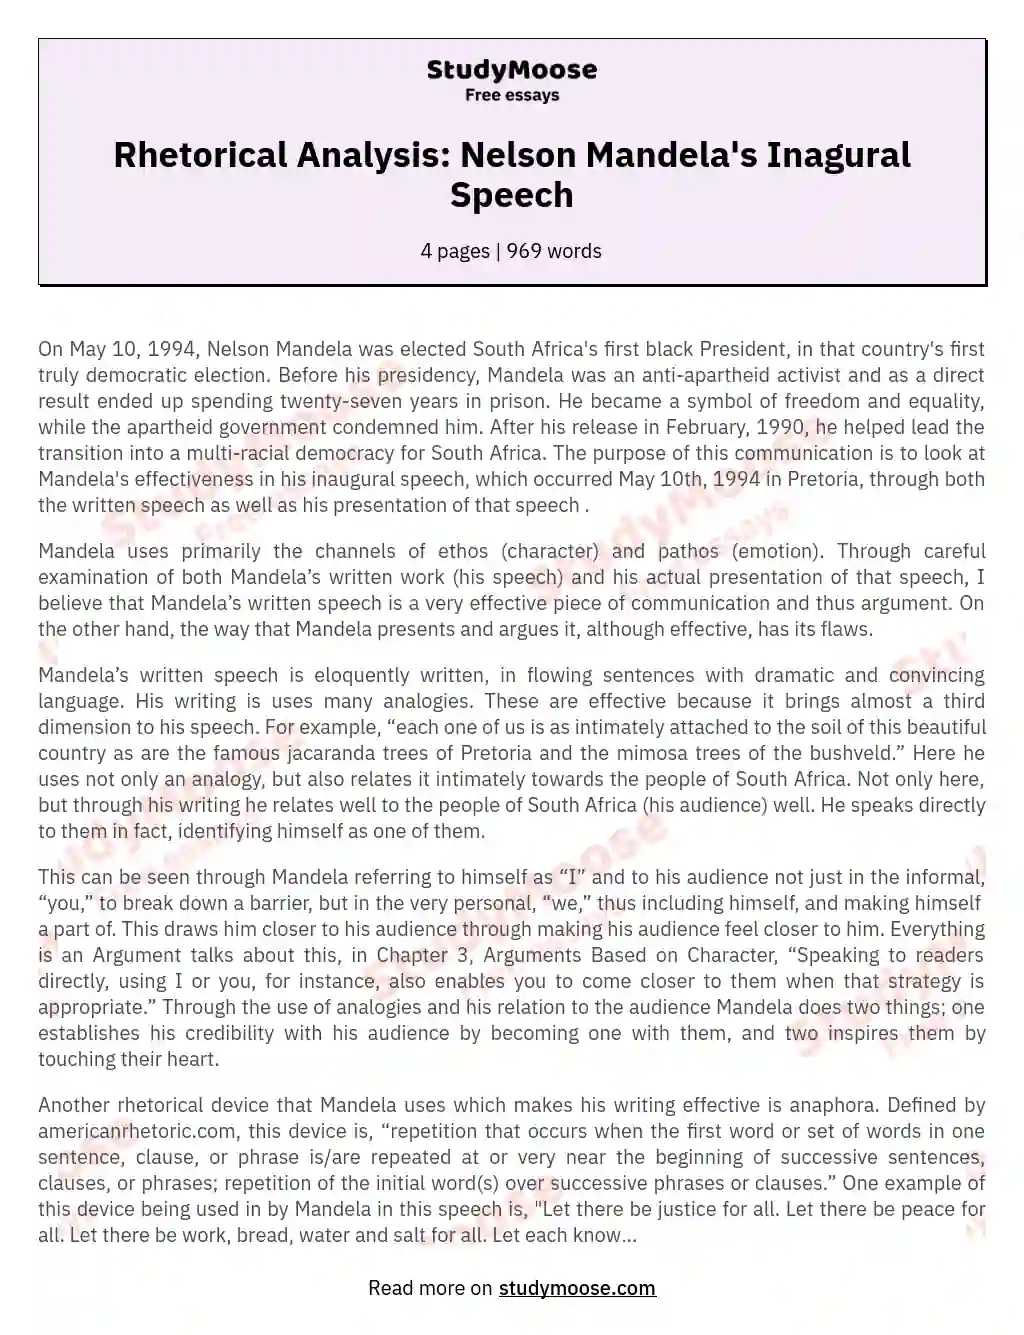 Rhetorical Analysis: Nelson Mandela's Inagural Speech essay